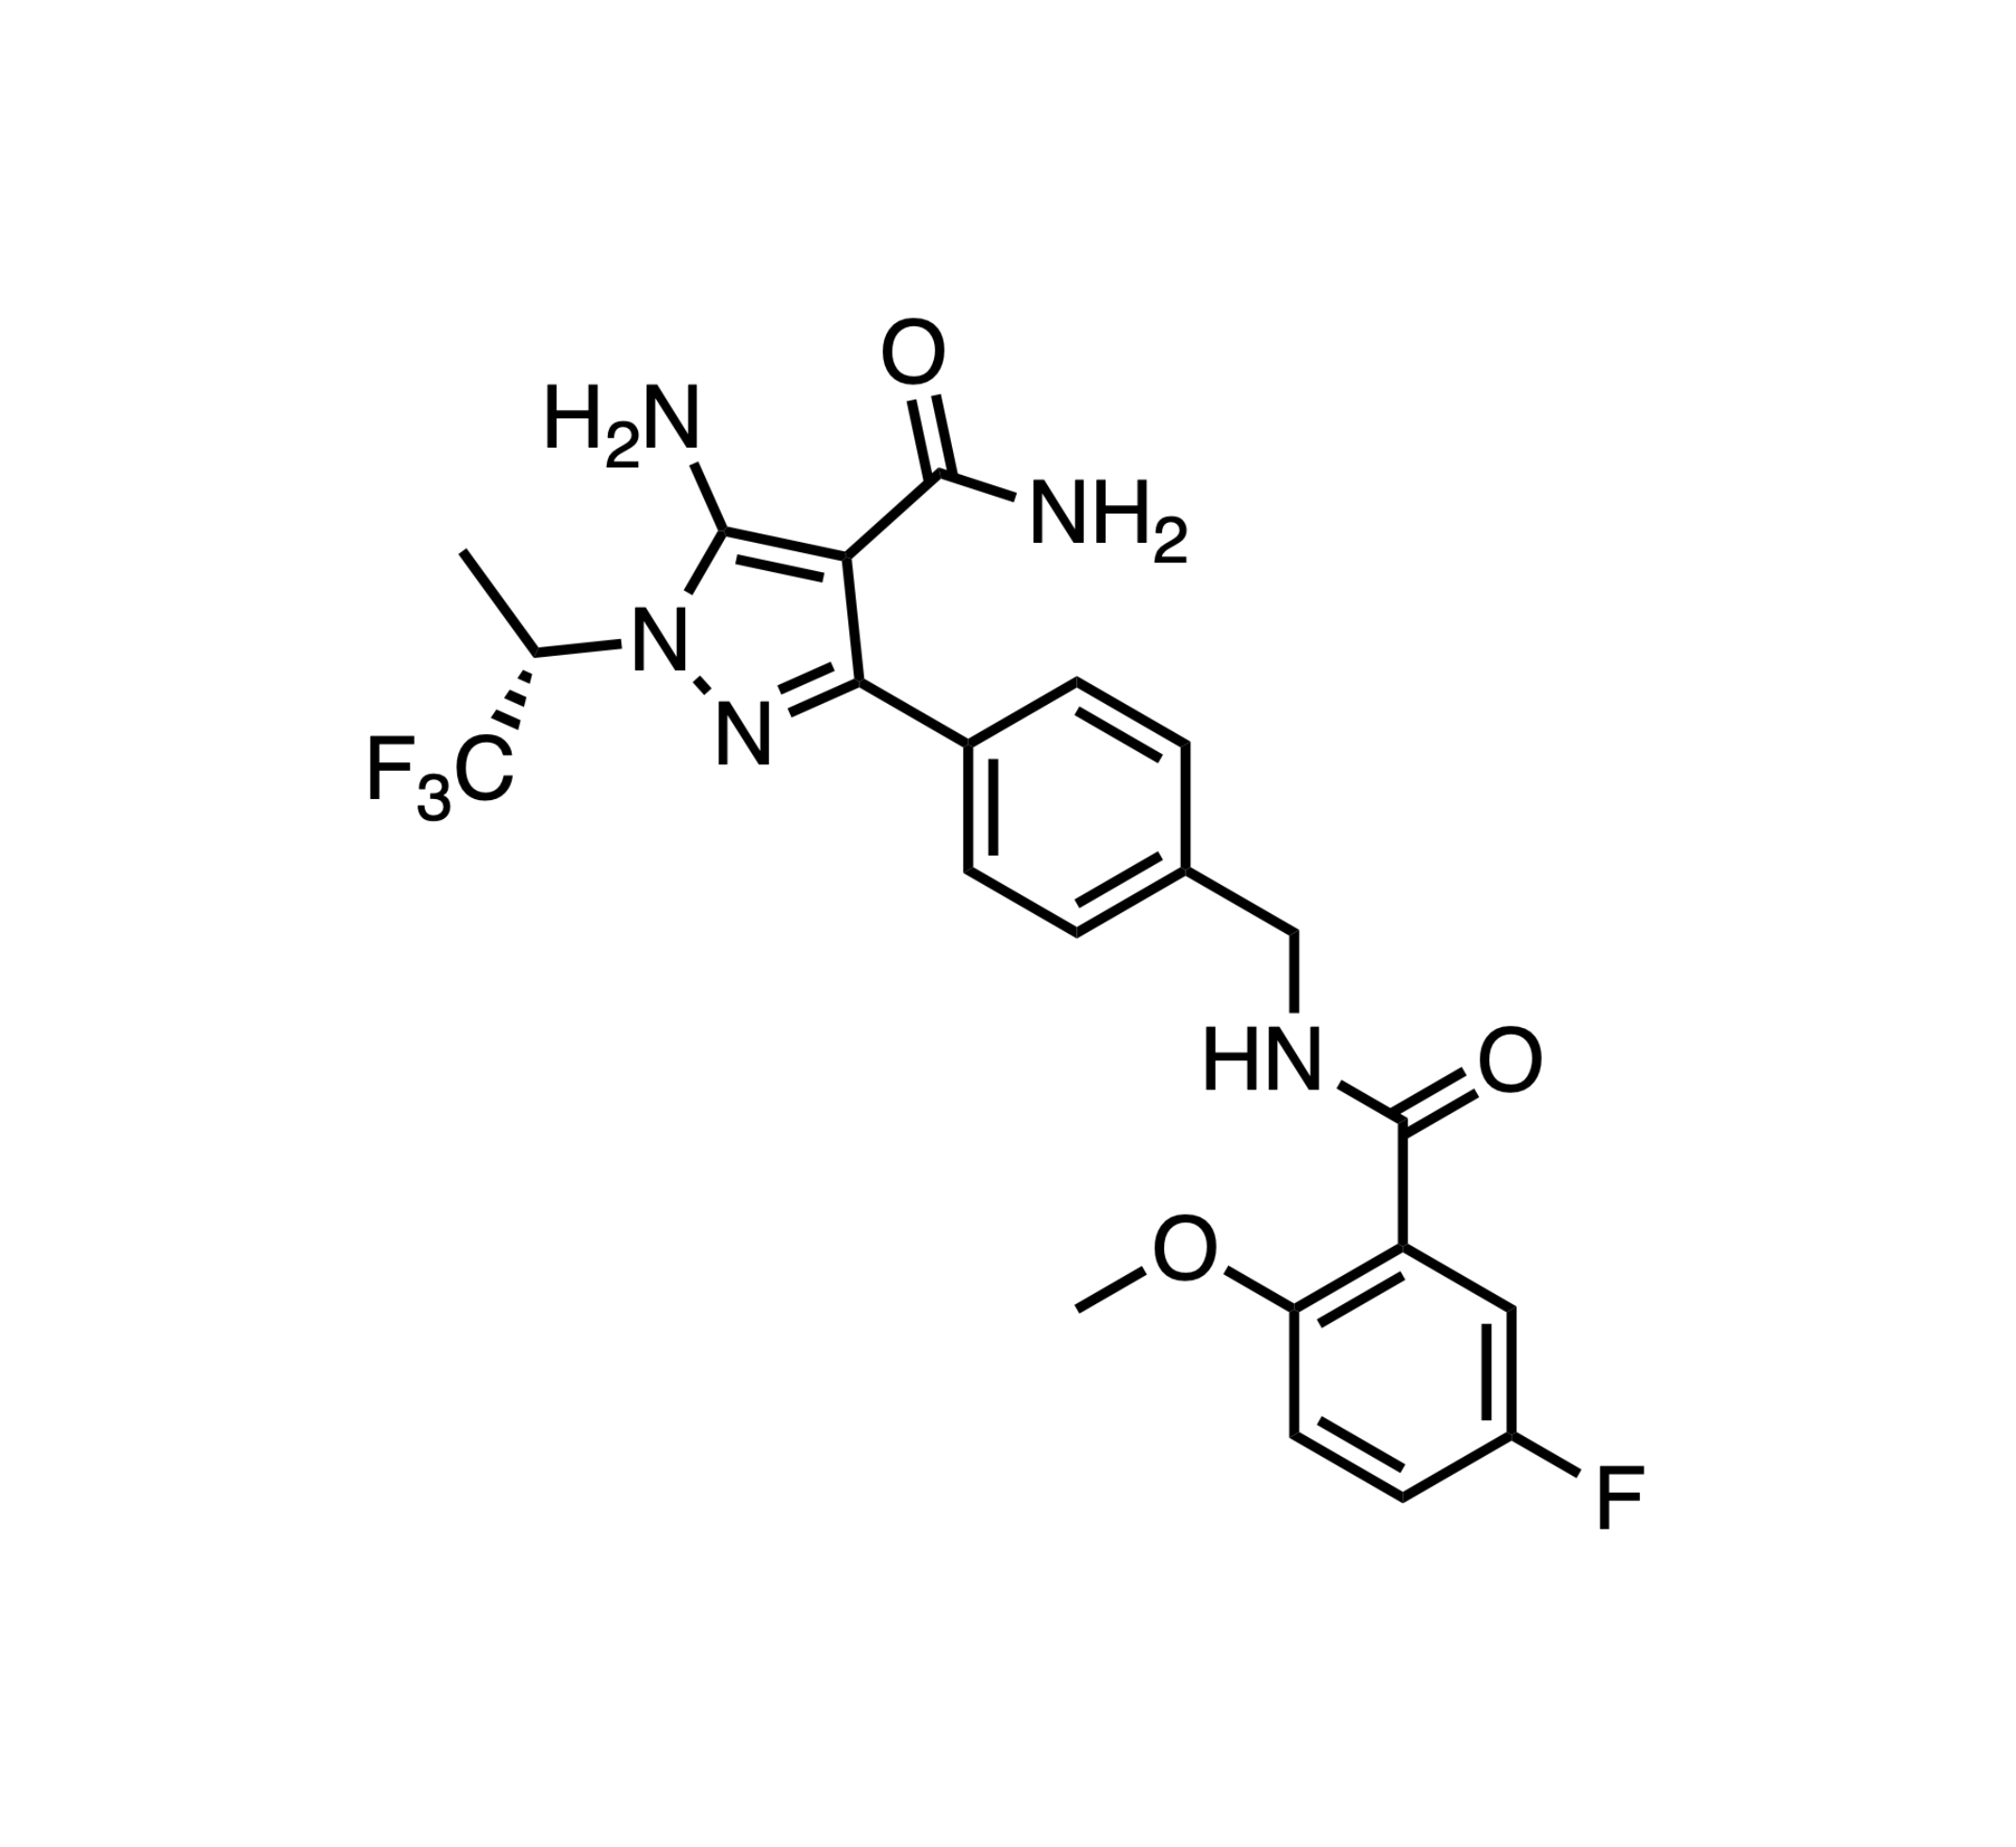 pirtobrutinib chemical structure oral, reversible BTK inhibitor - Redx, Alderly Park, UK (Loxo/Lilly)|||